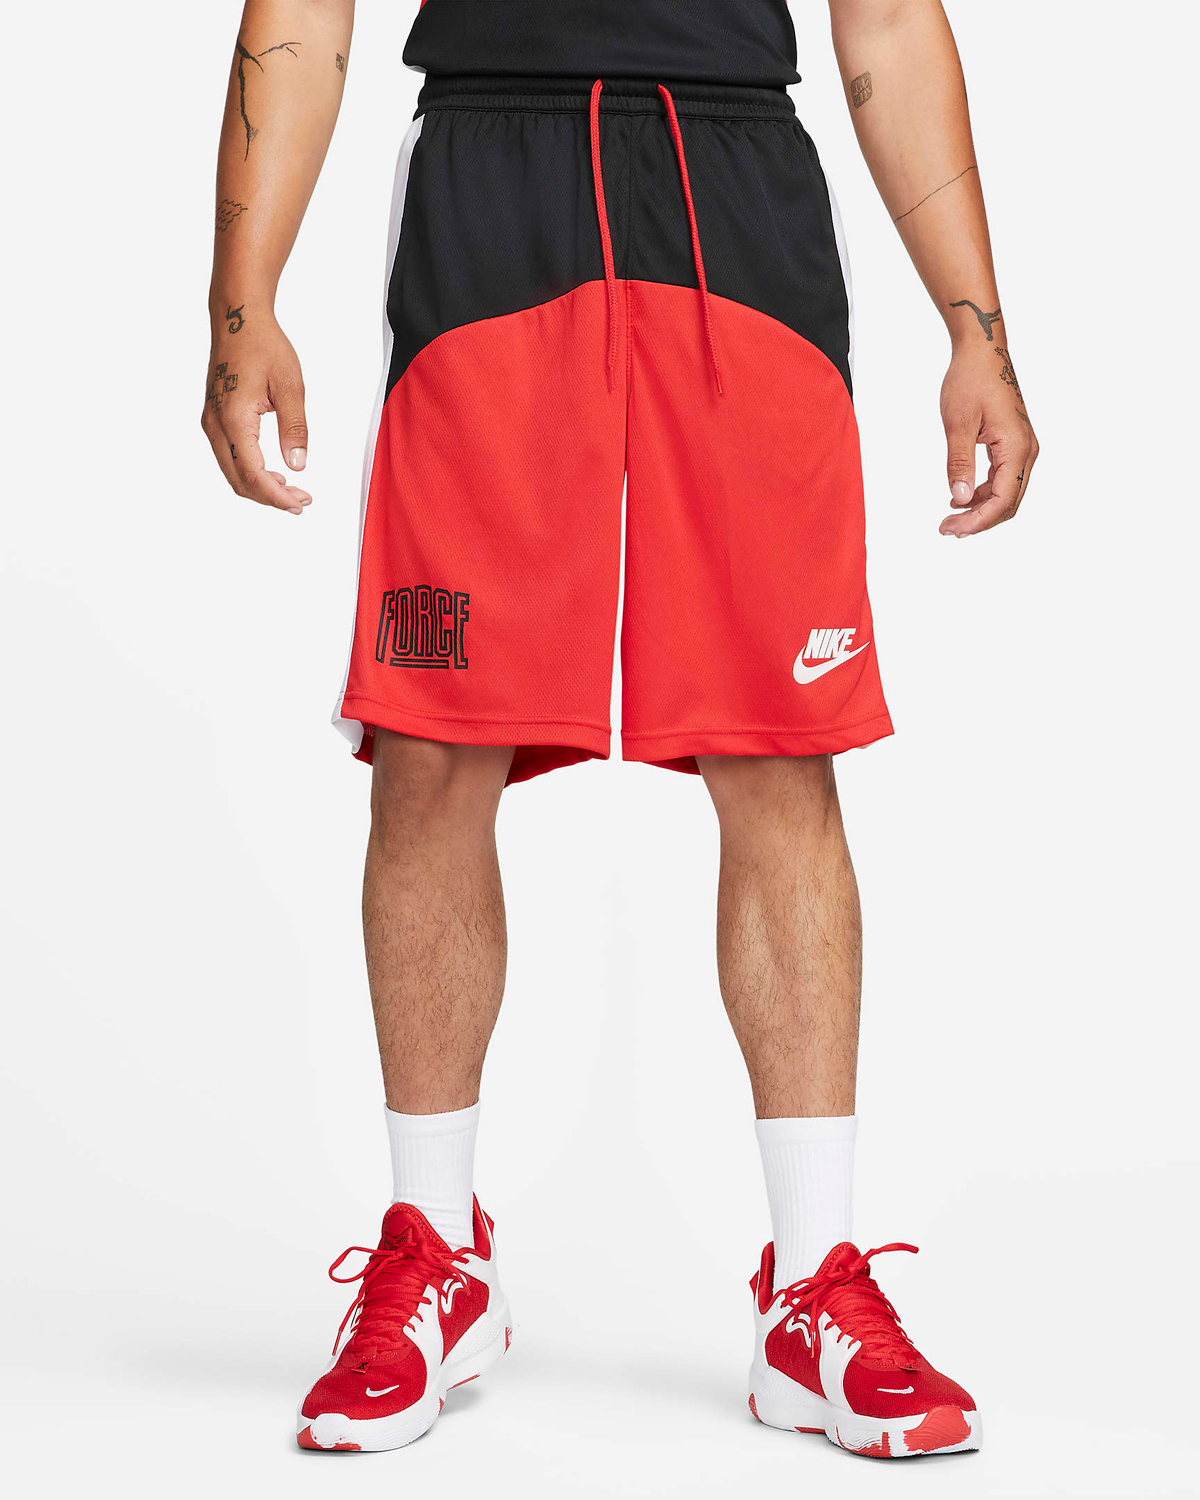 Nike-Starting-5-Basketball-Shorts-University-Red-Black-White-1